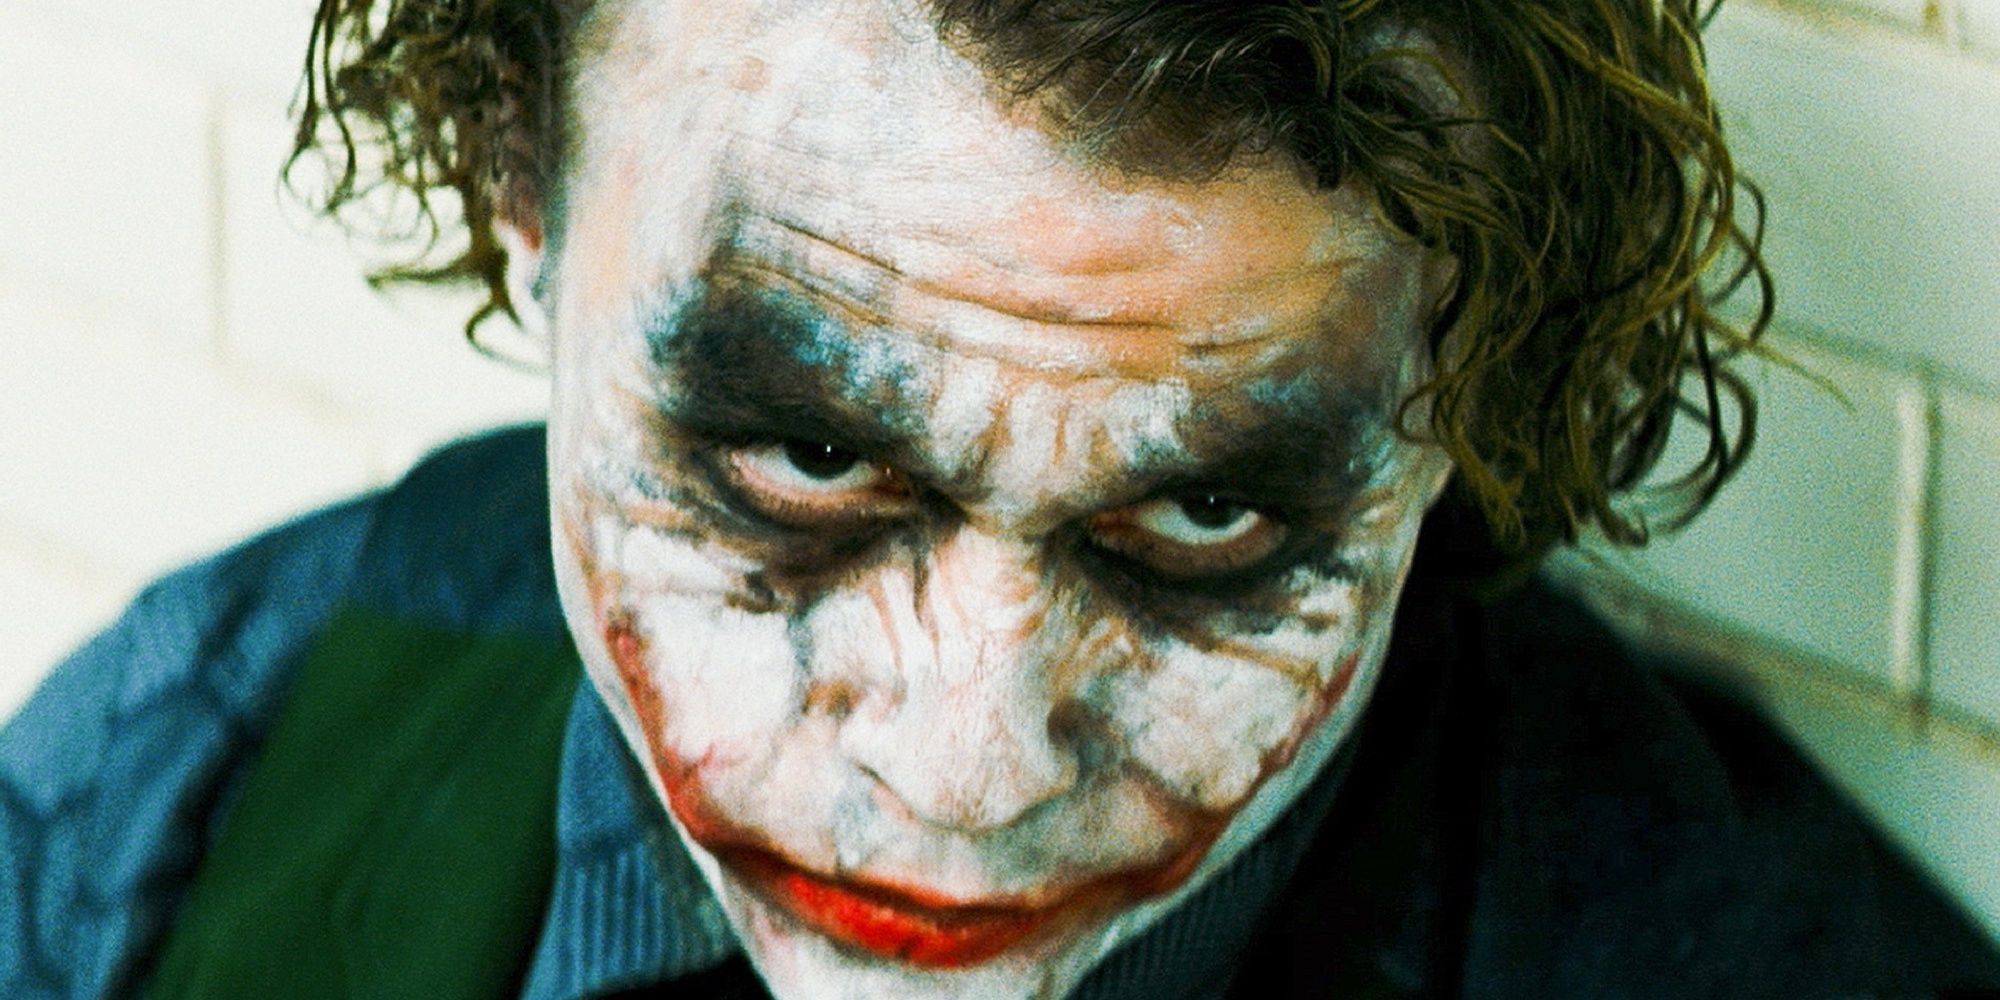 The Joker sitting on the floor of the interrogation room in The Dark Knight.